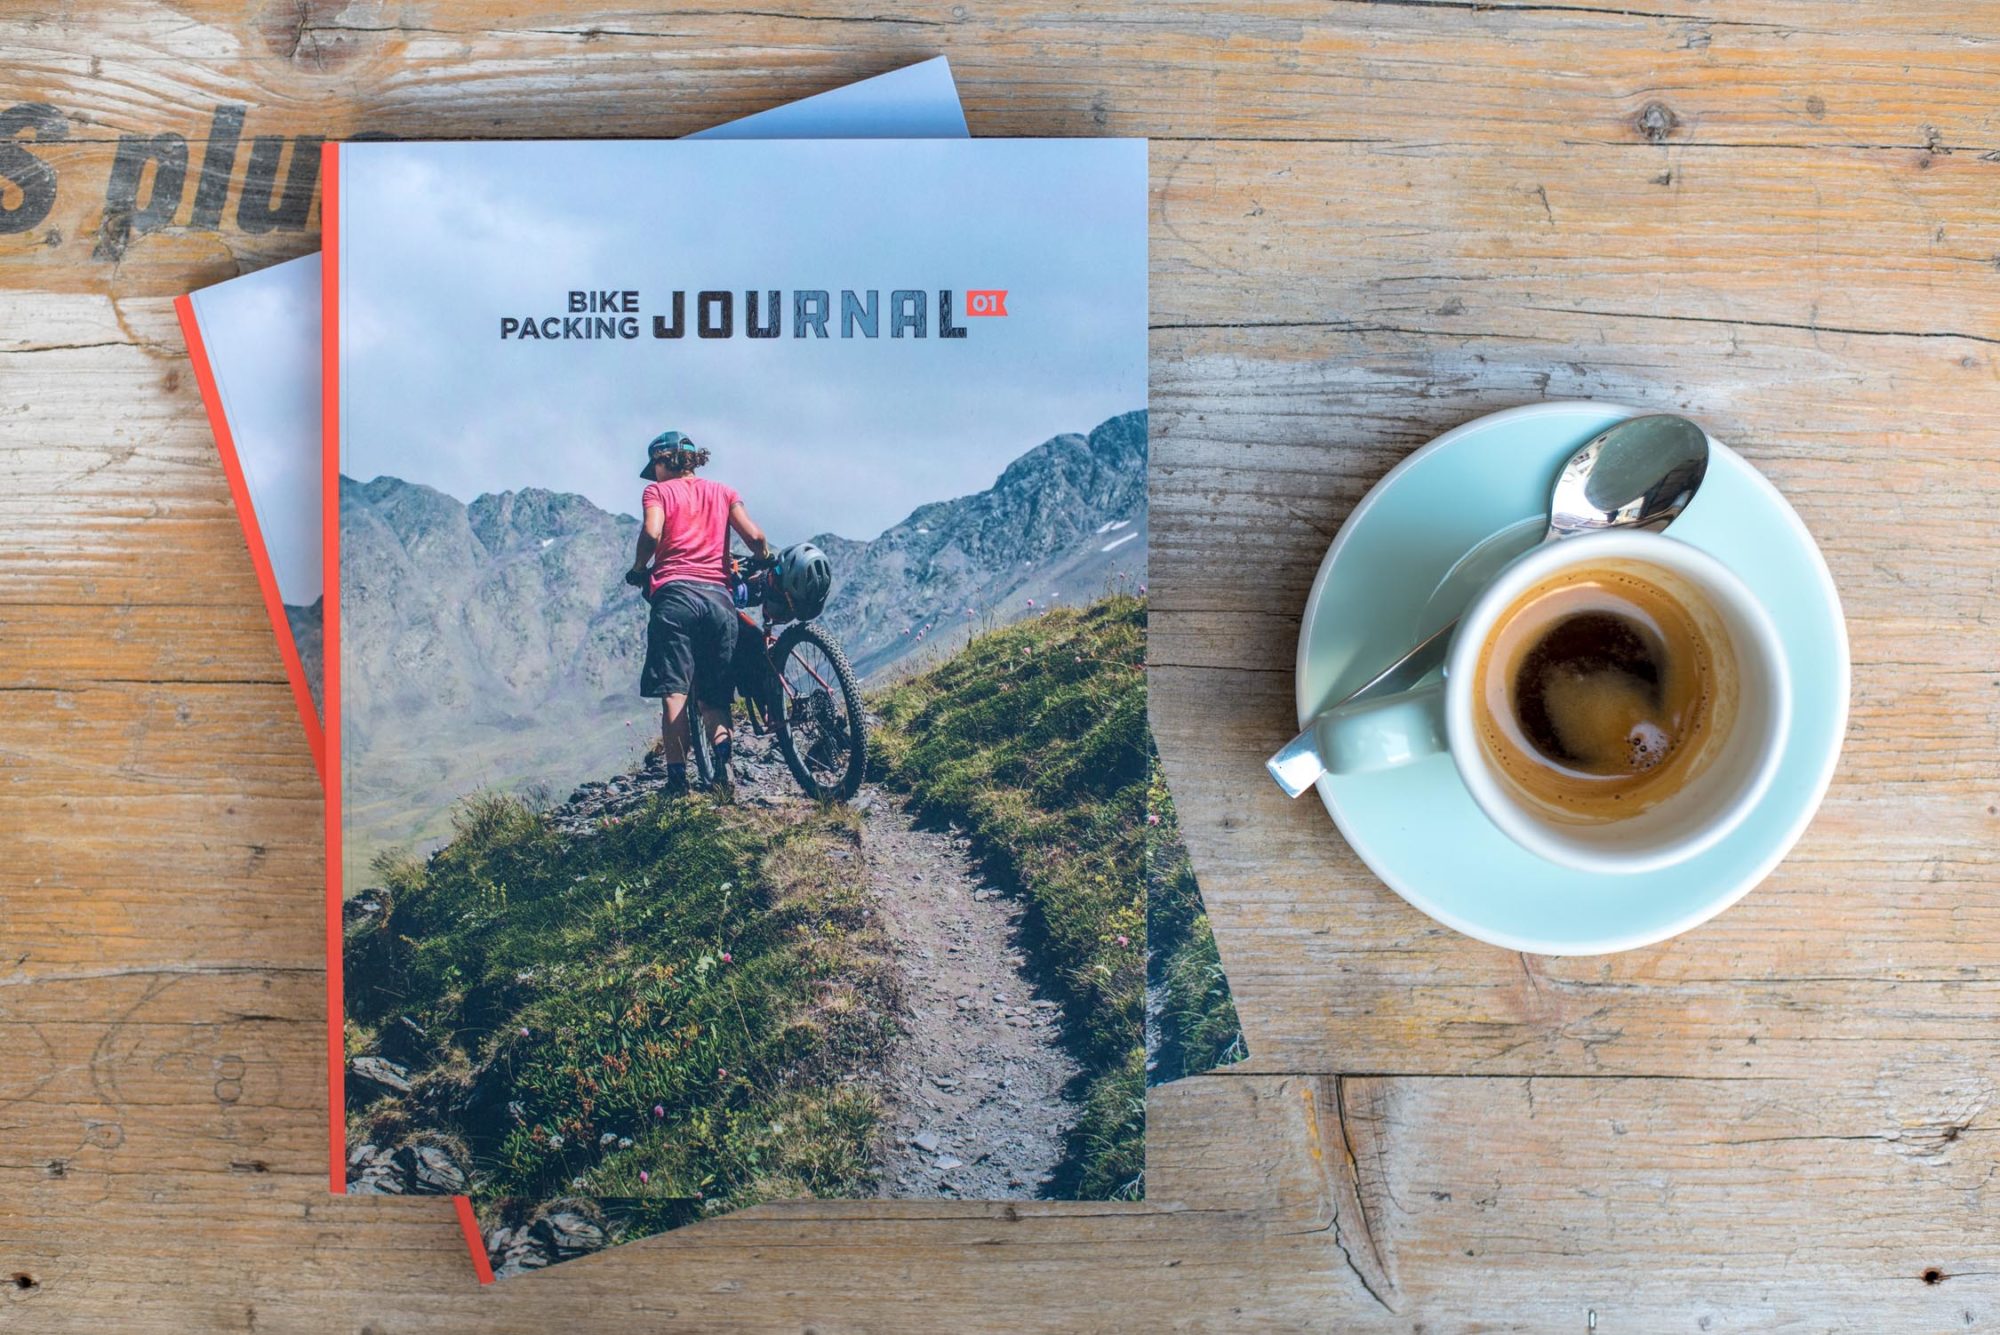 Bikepacking Journal Issue 01